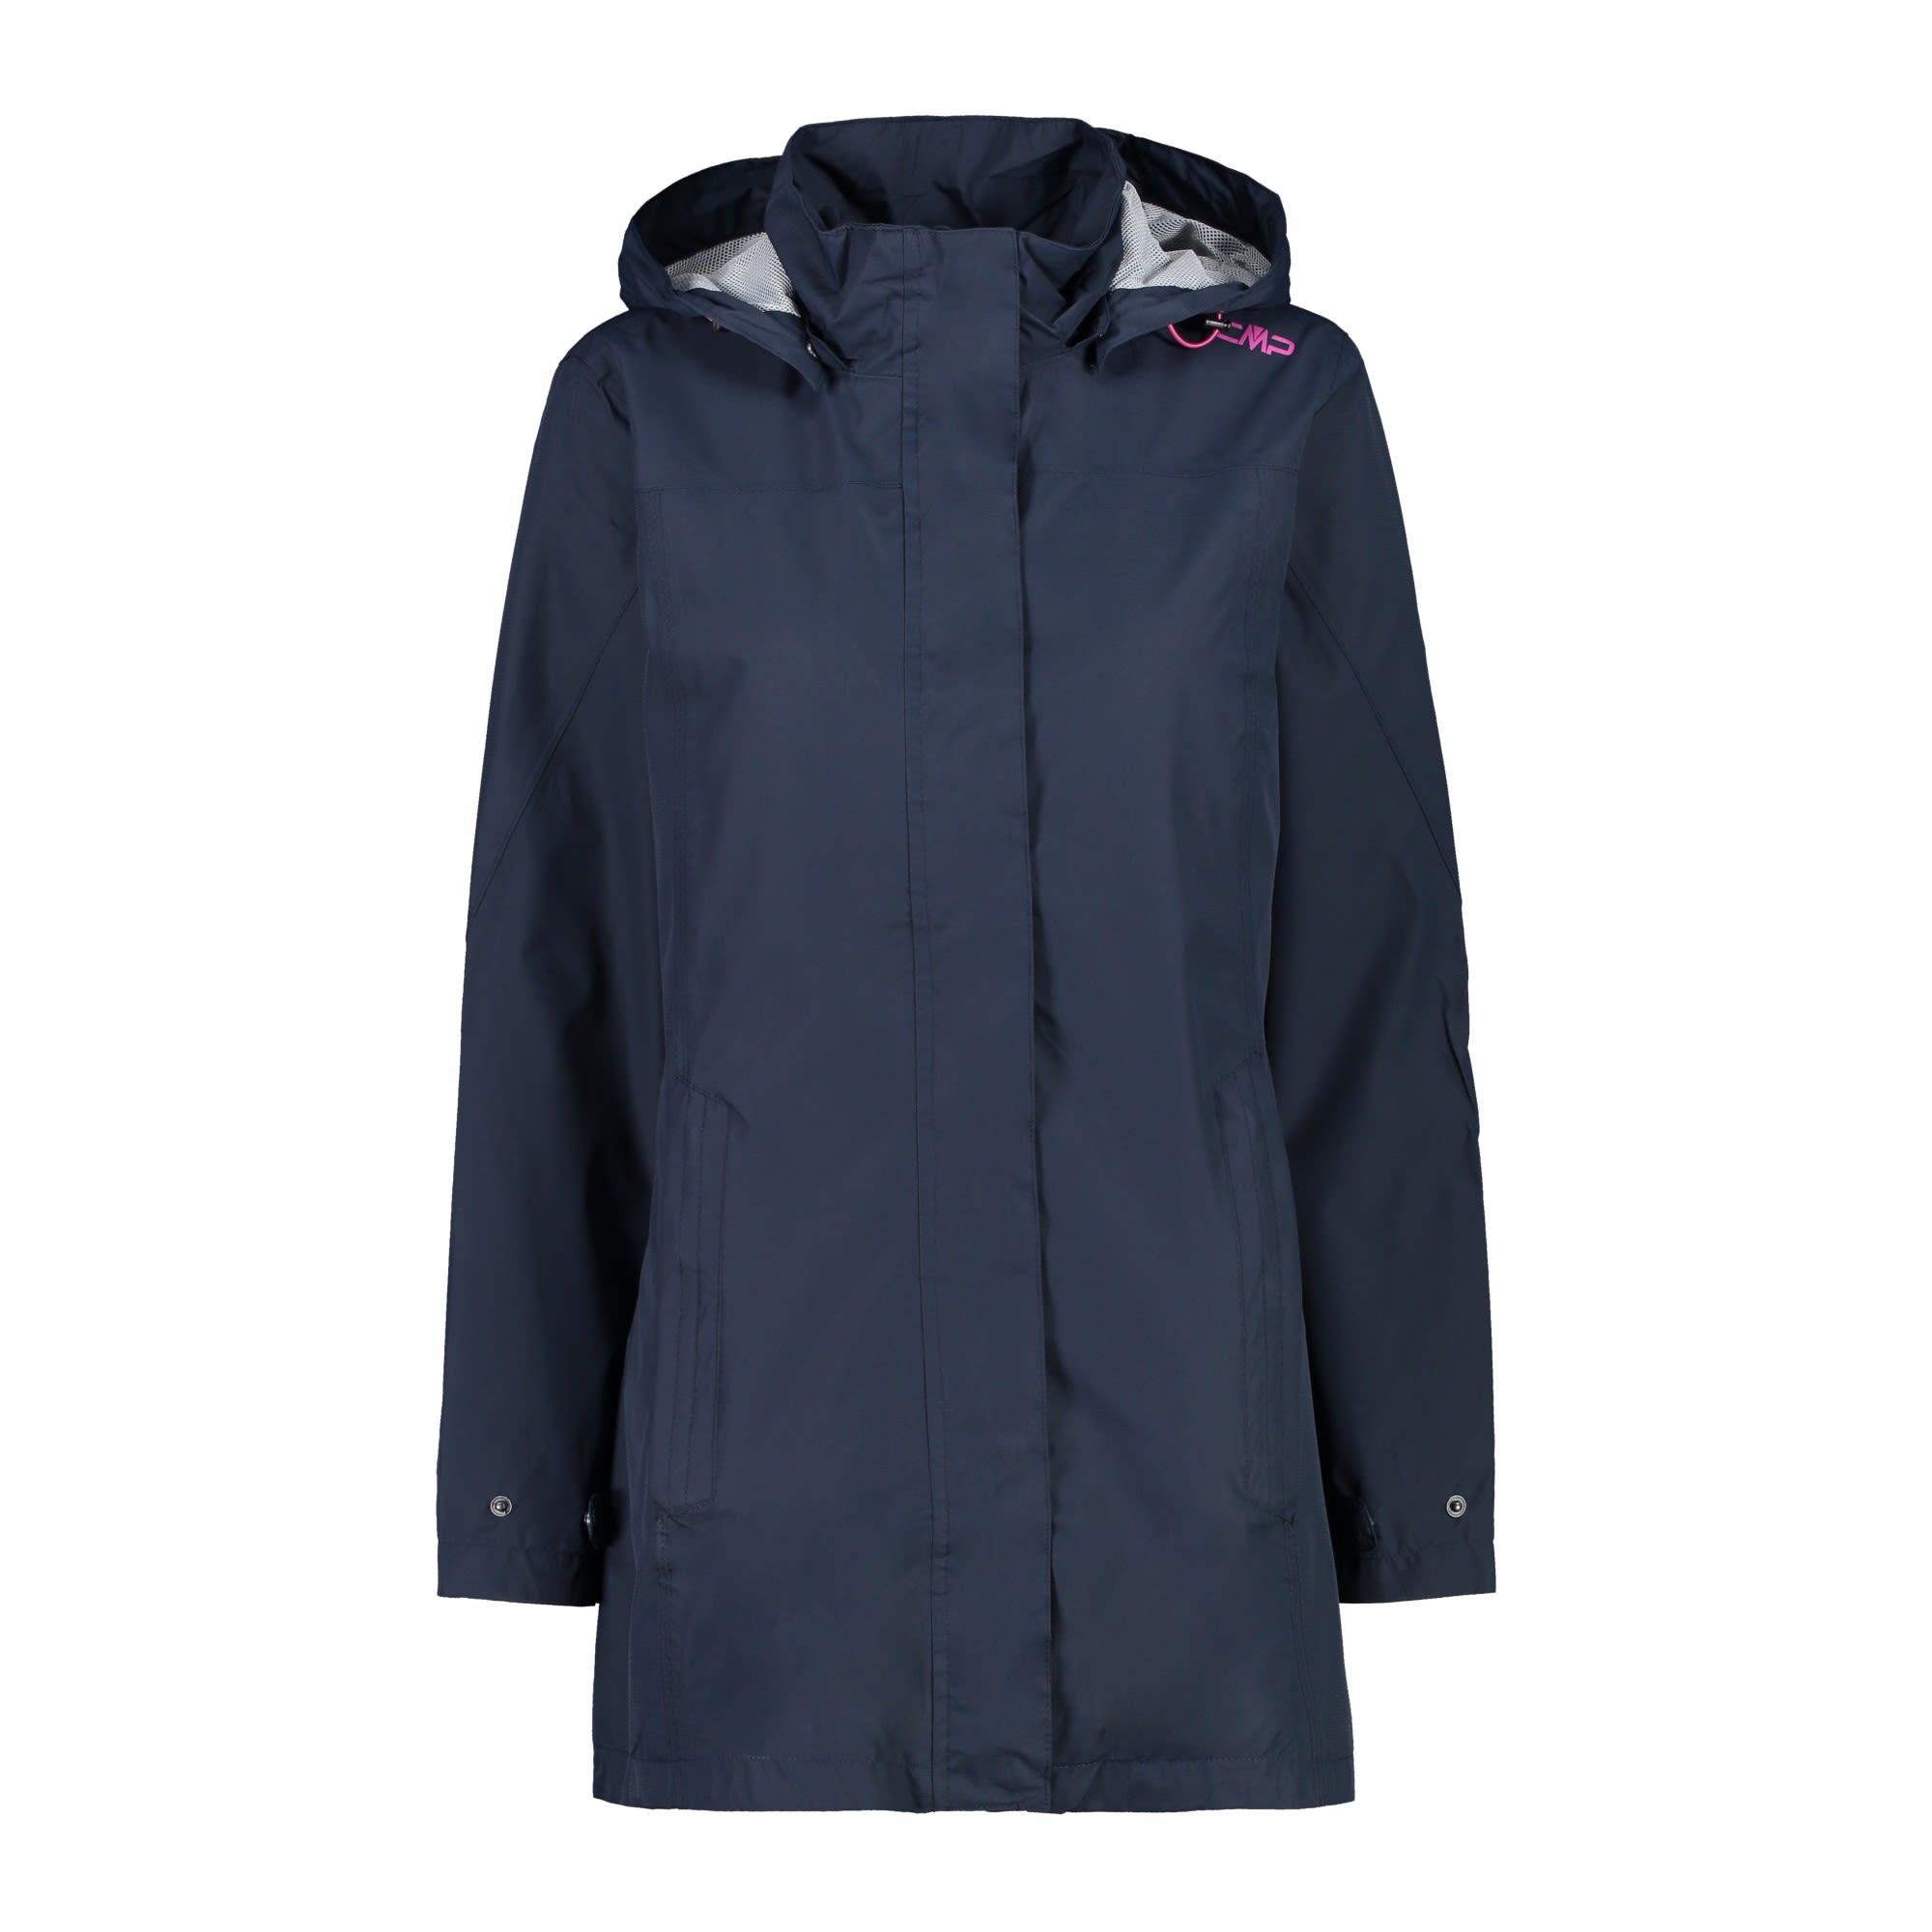 CMP Jacket Snaps Hood II Schwarz- Female Regenjacken und Hardshells- Grsse 34 - Farbe Blackblue